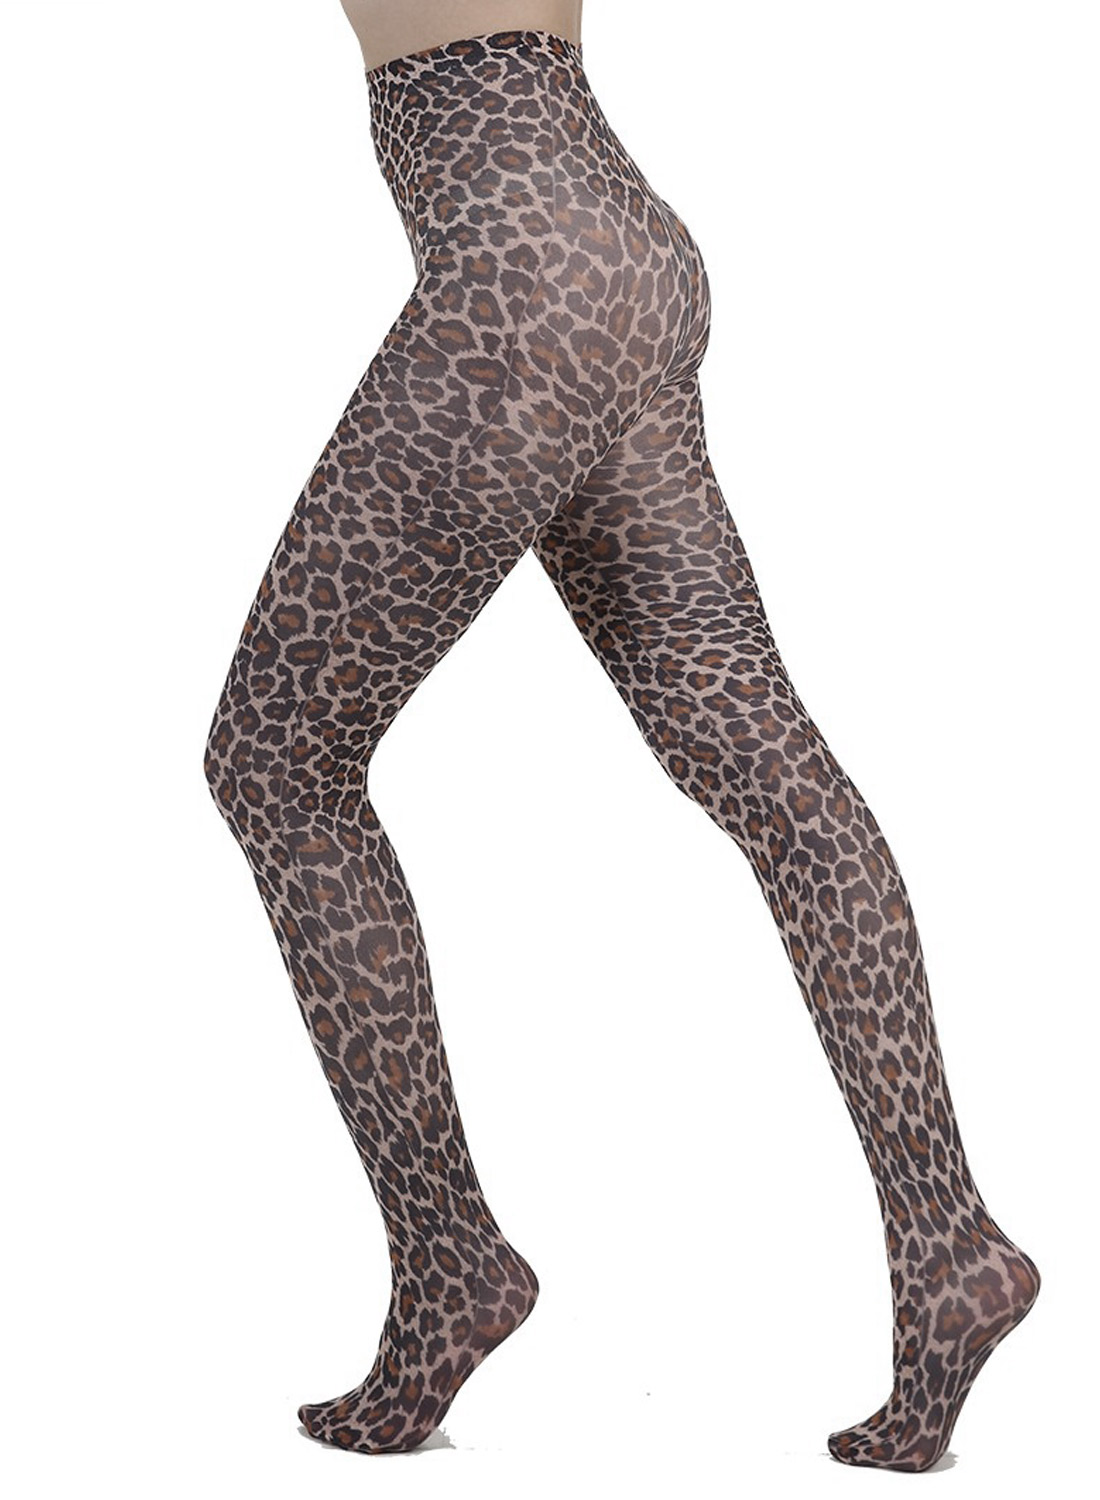 Leopard Printed Tights Natural